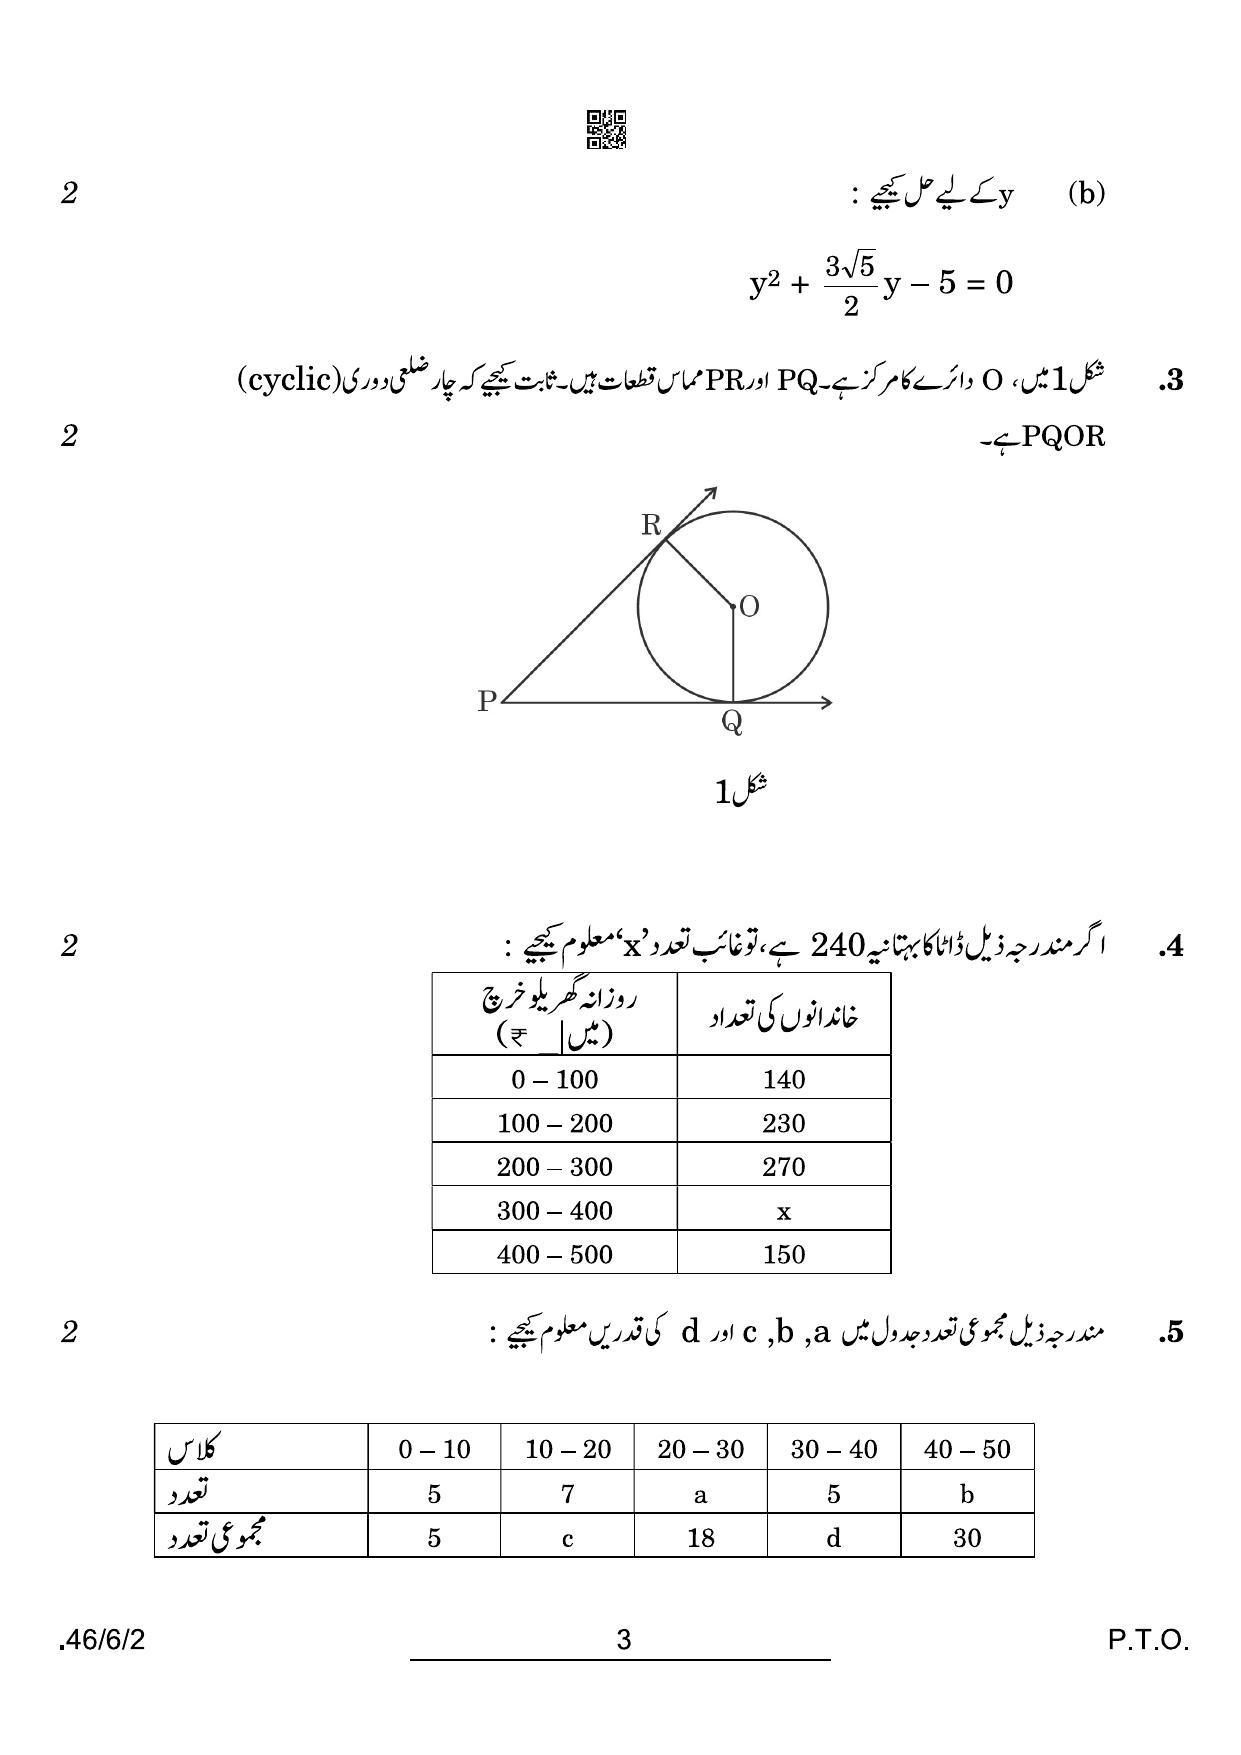 CBSE Class 10 46-6-2 Maths Standard Urdu 2022 Compartment Question Paper - Page 3